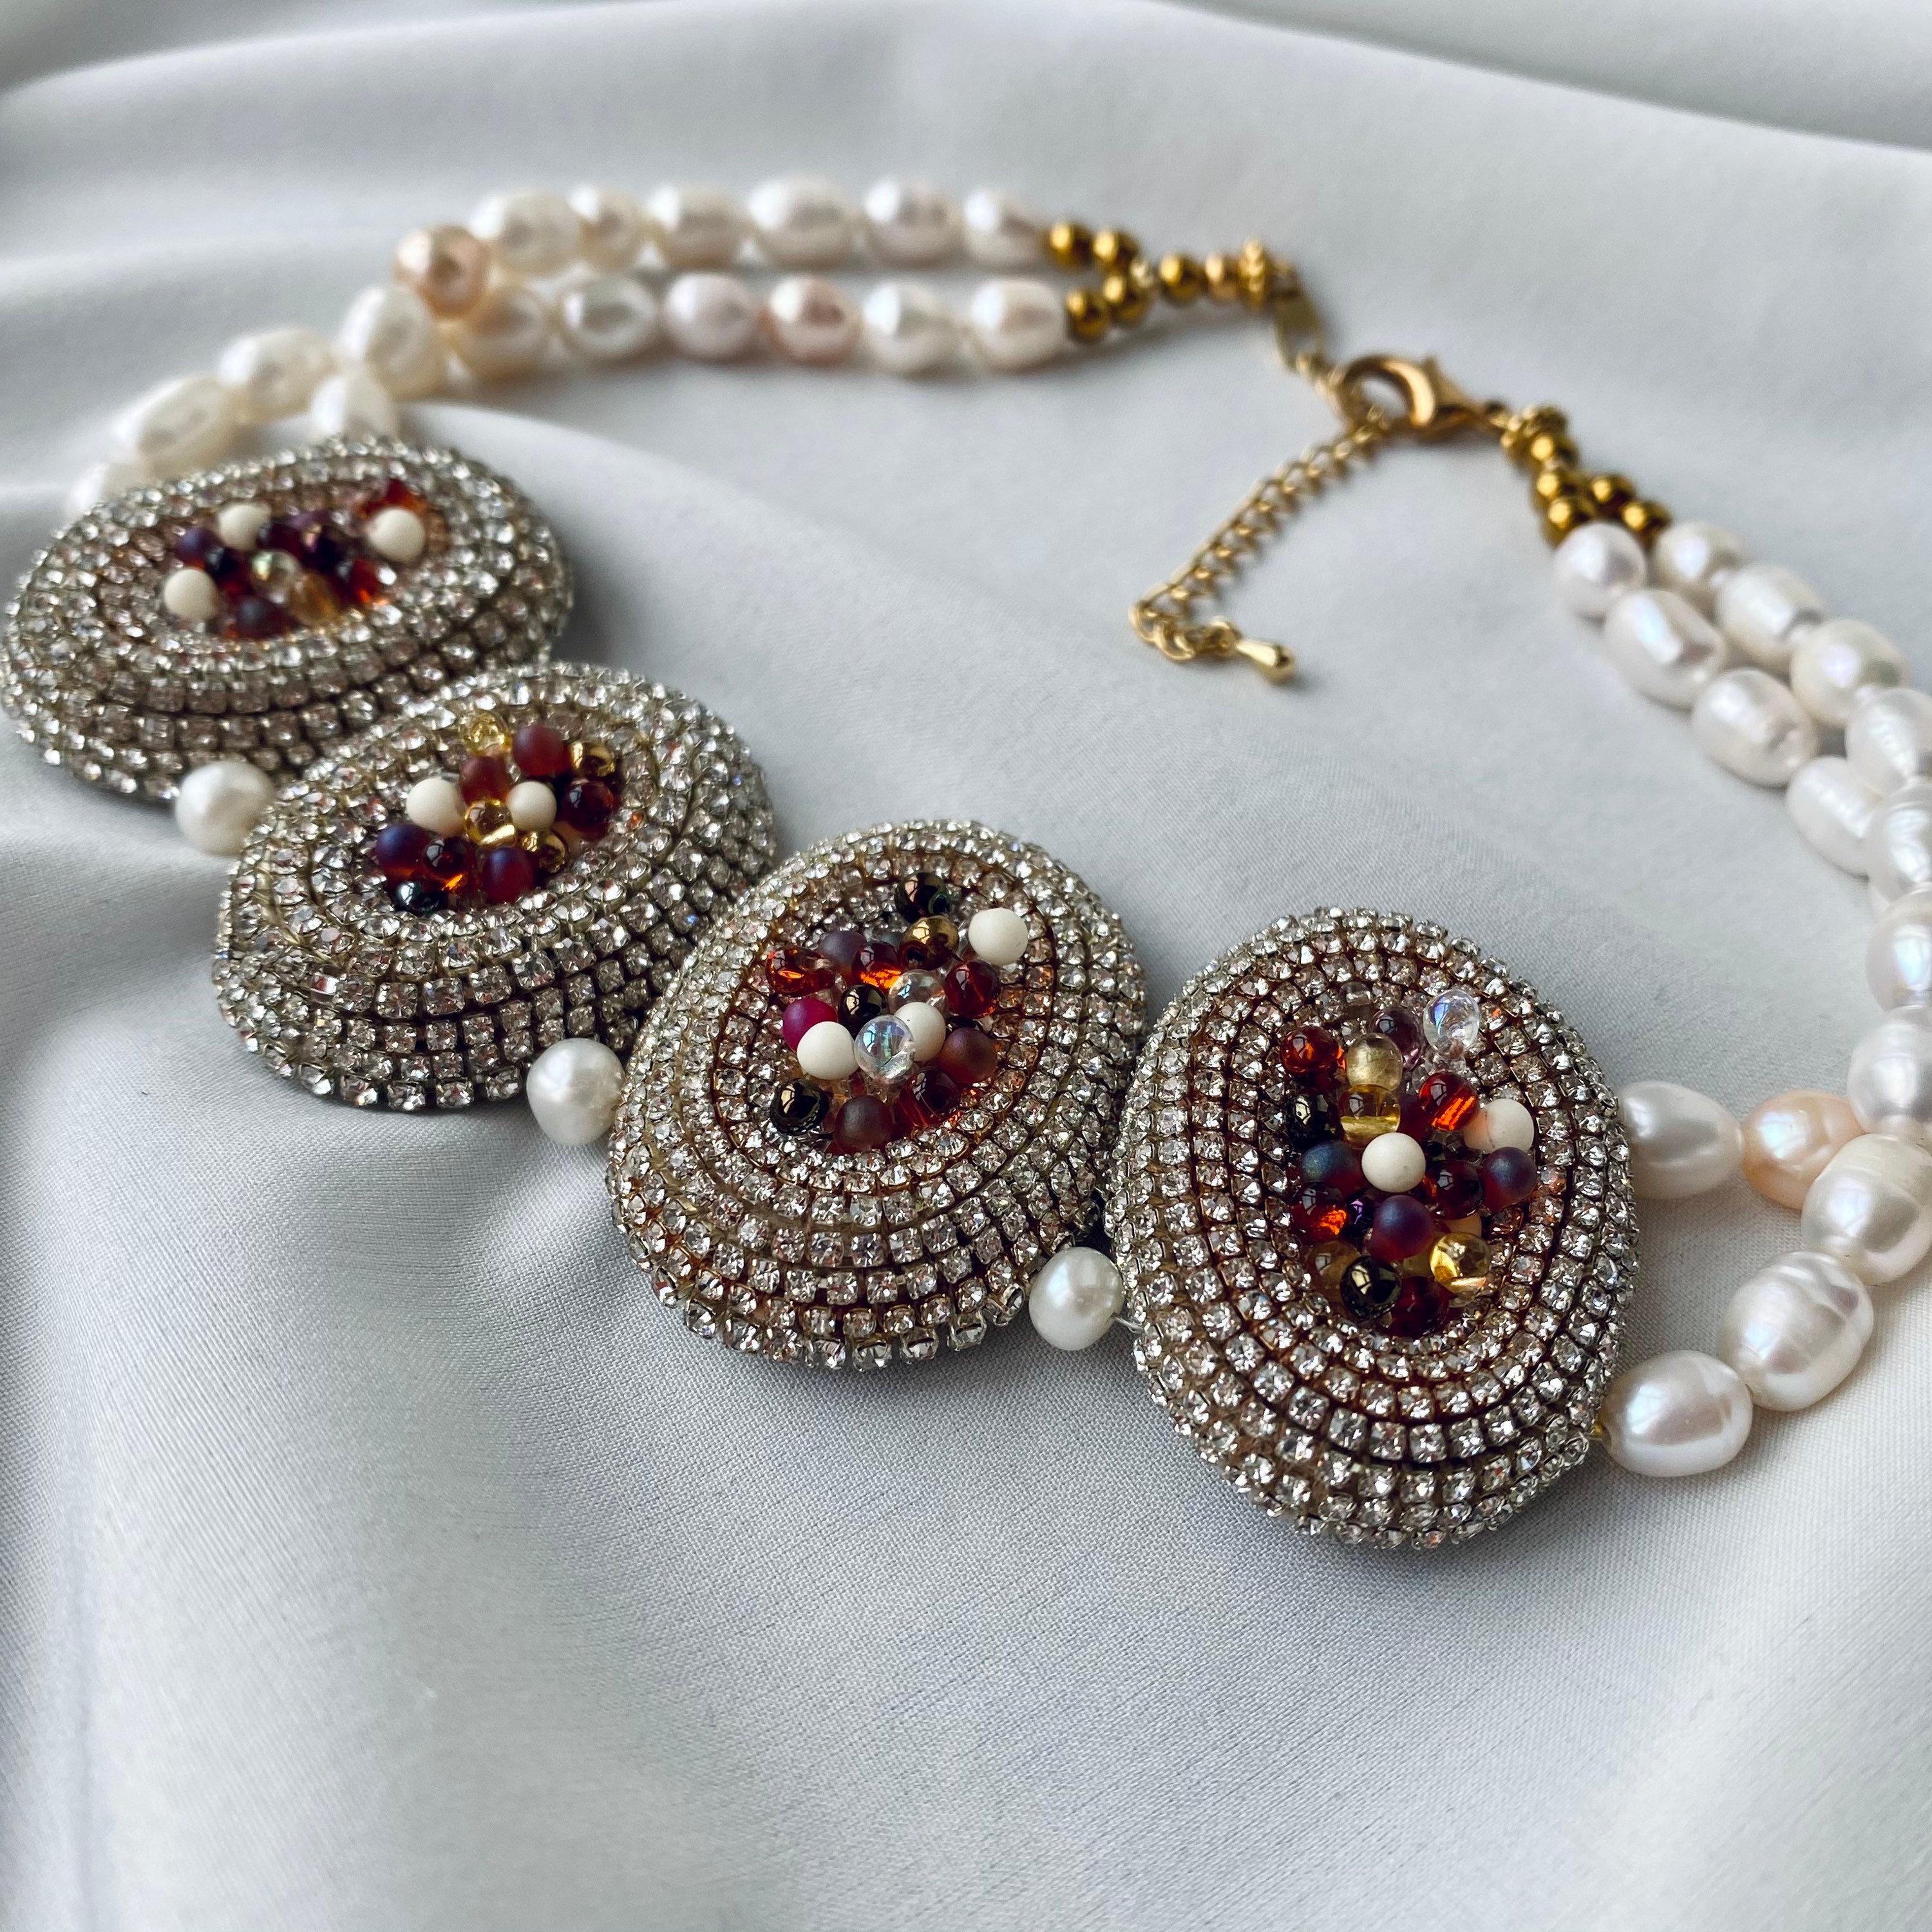 Regency necklace Bead embroidered festoon necklace Rhinestone | Etsy